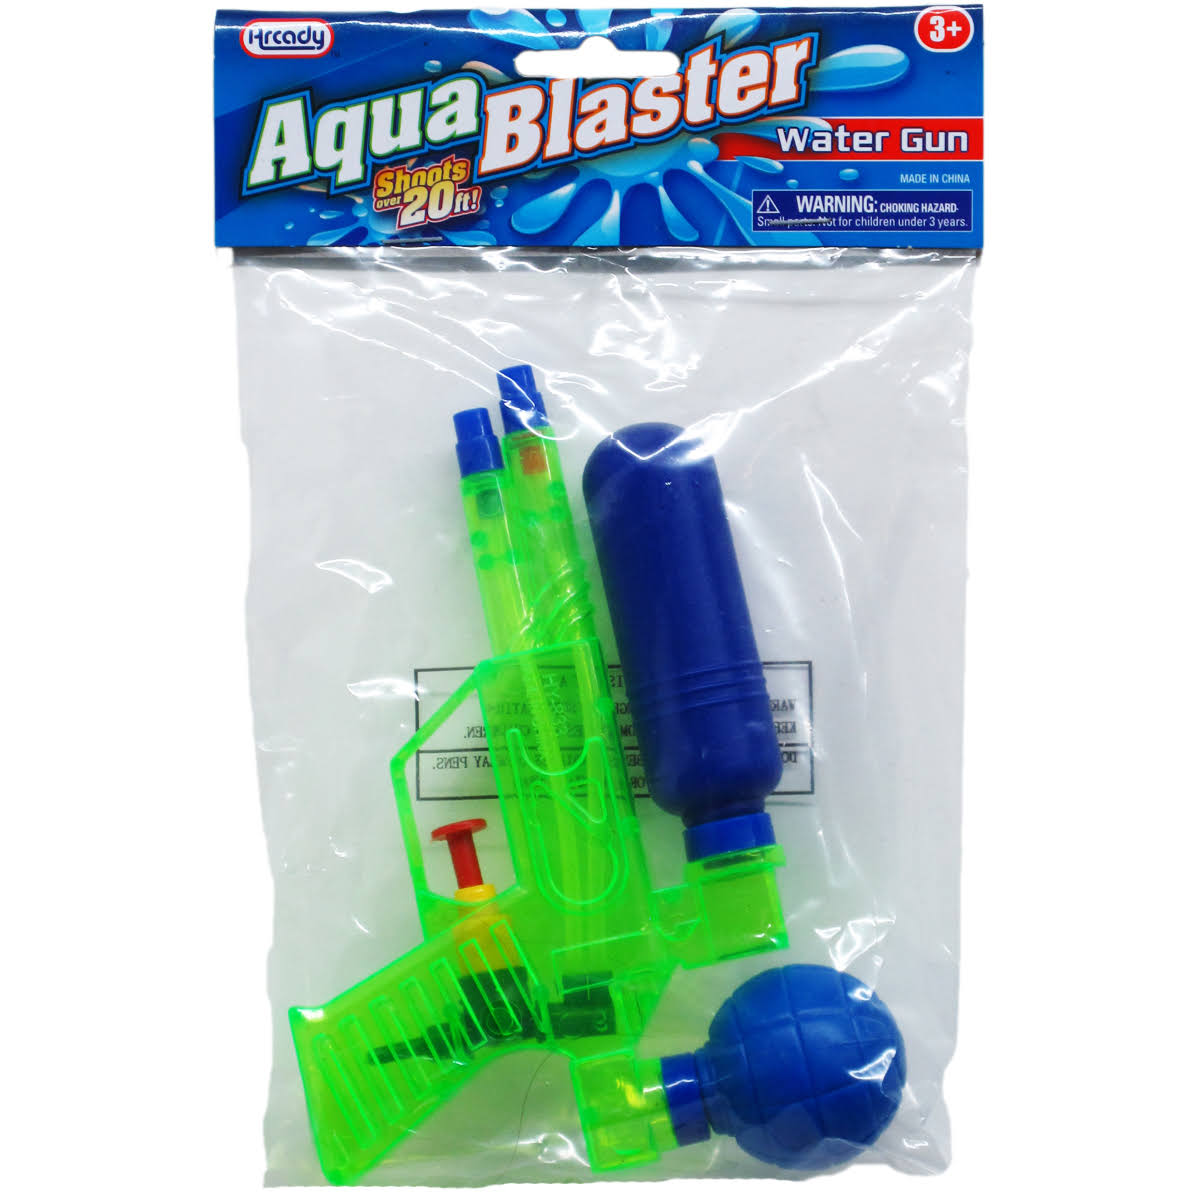 Ddi 2339512 6.75" Water Gun- Assorted Colors Case of 48